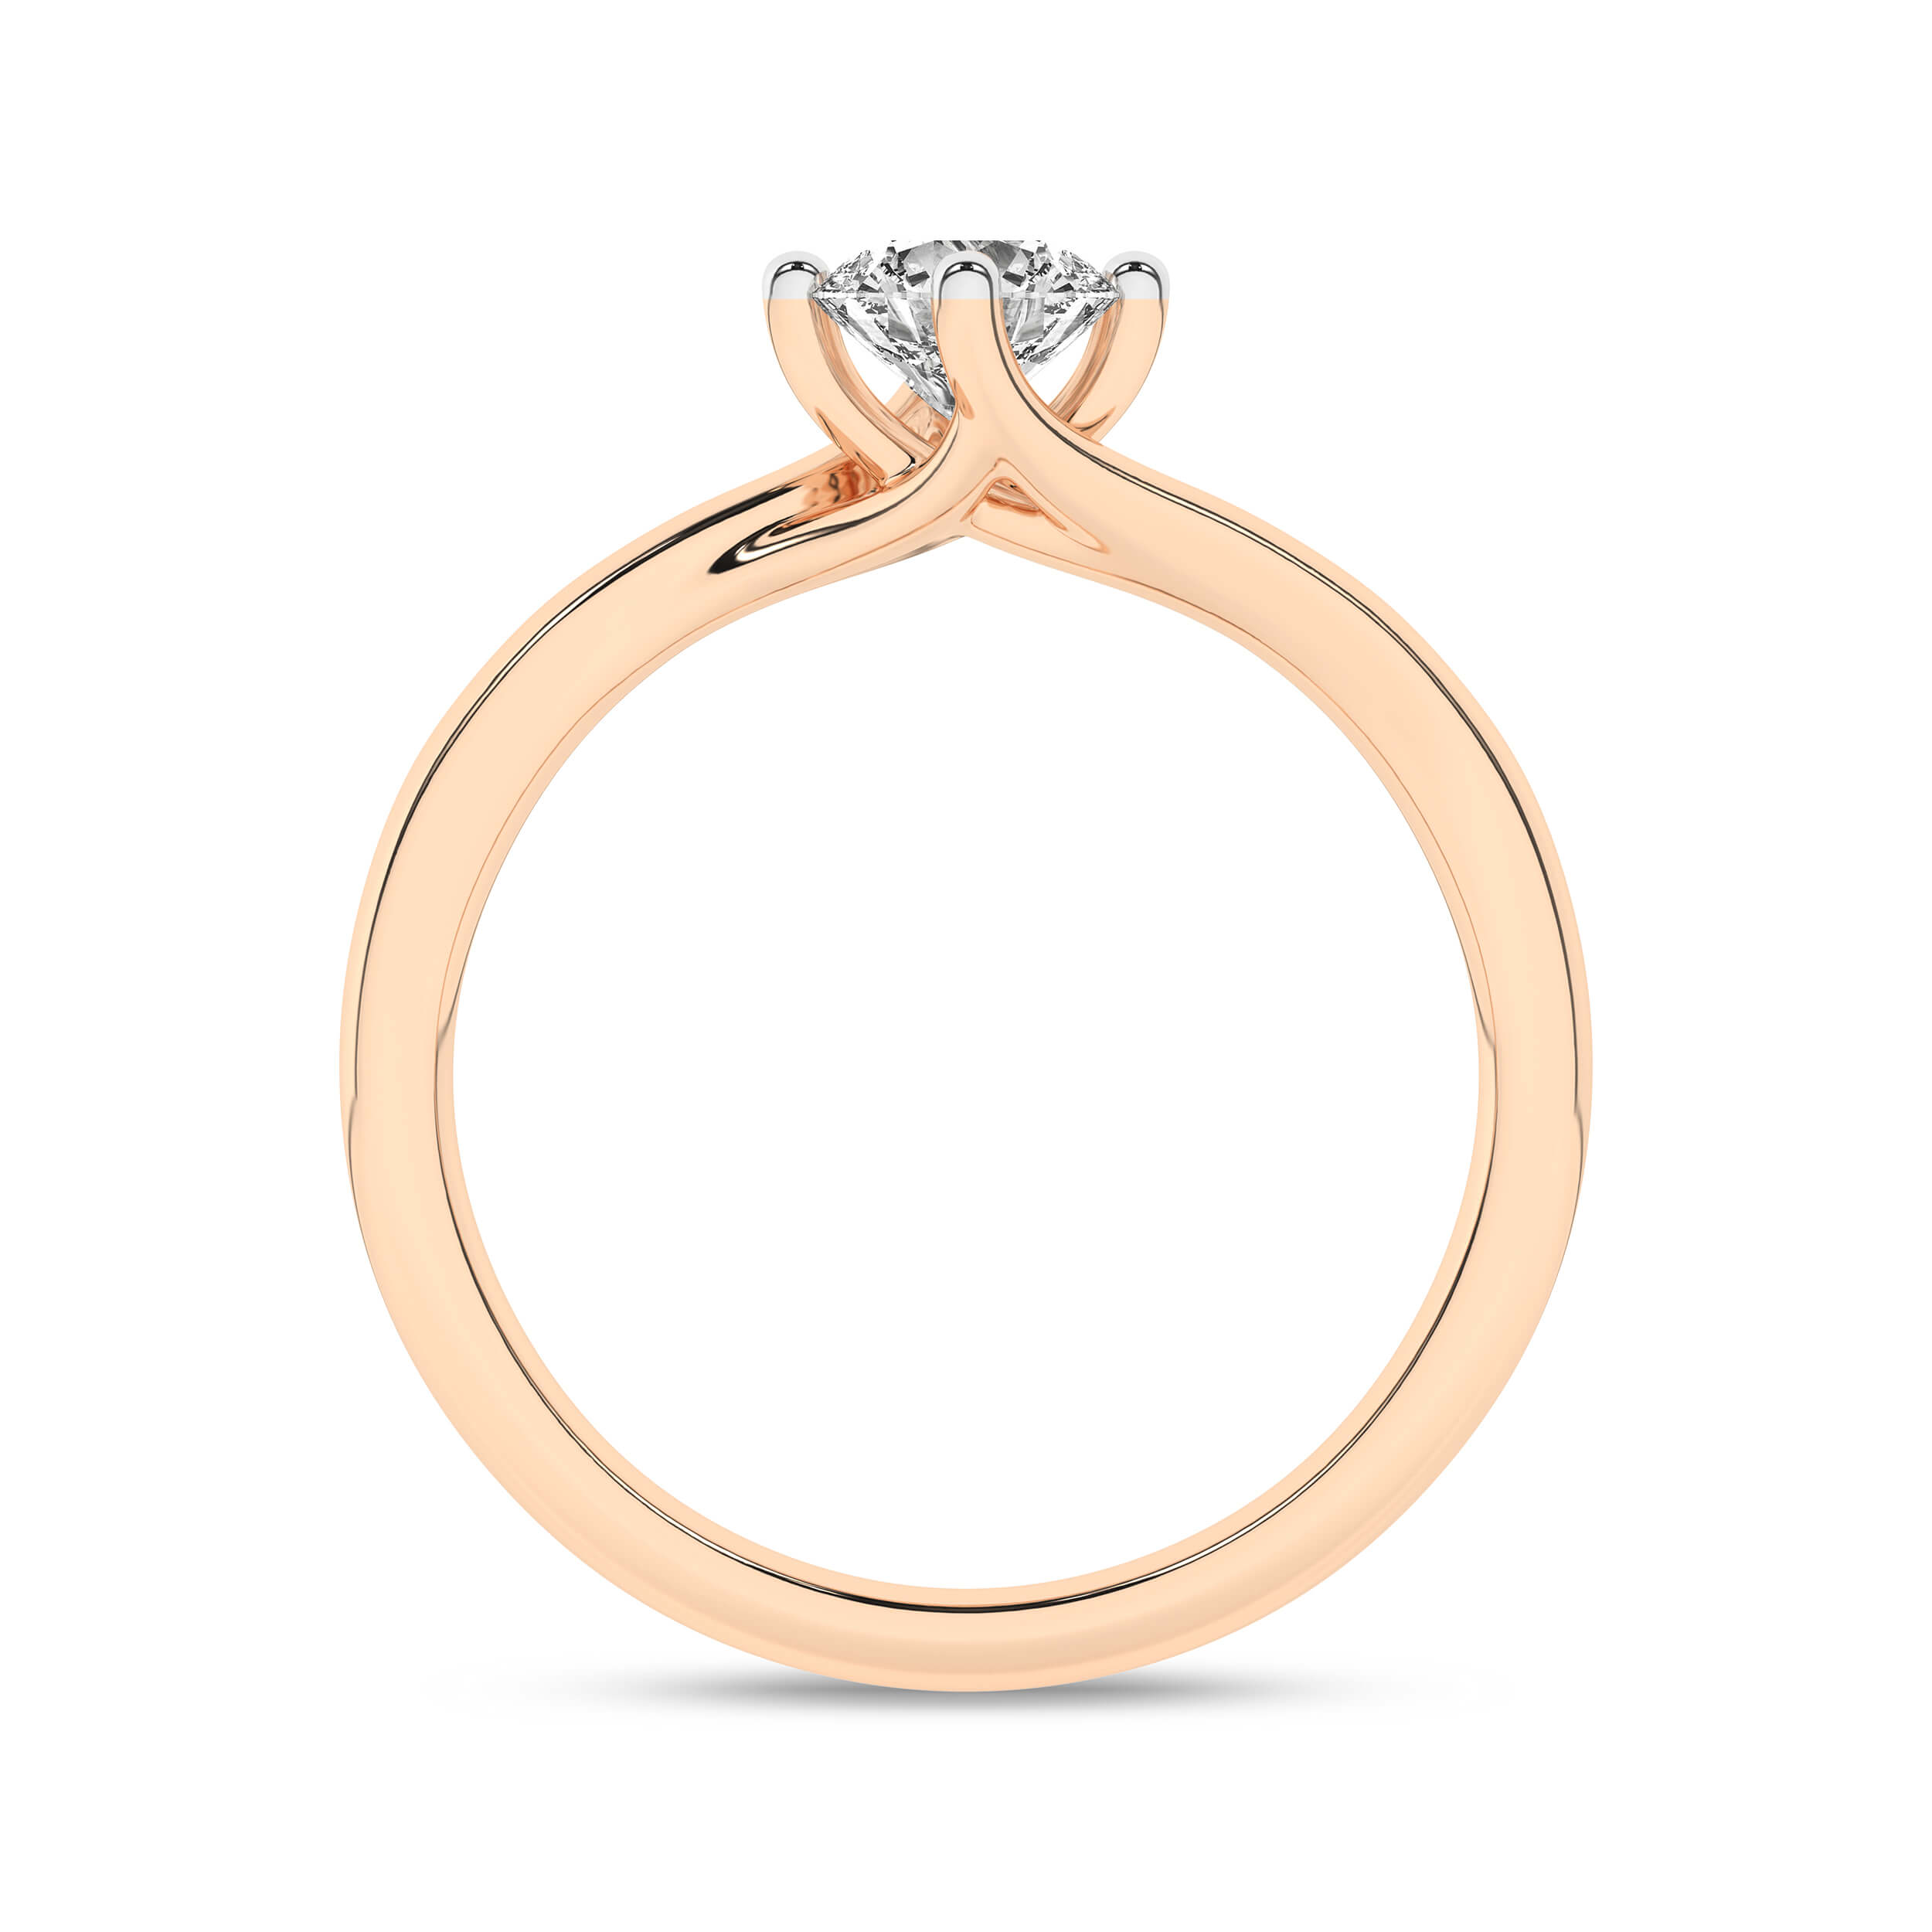 Inel de logodna din Aur Alb 14K cu Diamant 0.33Ct, articol RS1320, previzualizare foto 2